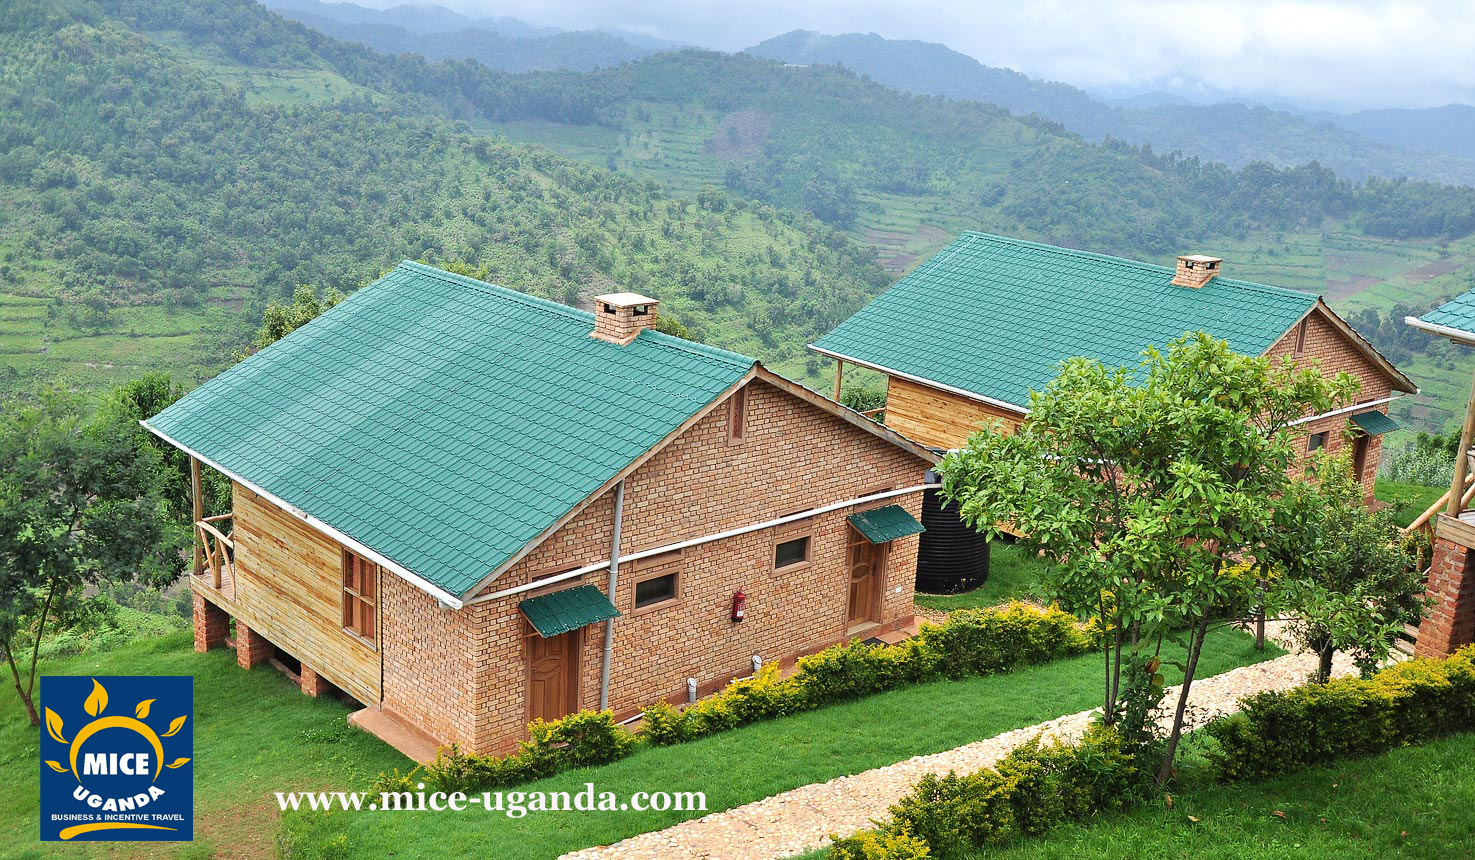 MICE Uganda accommodations